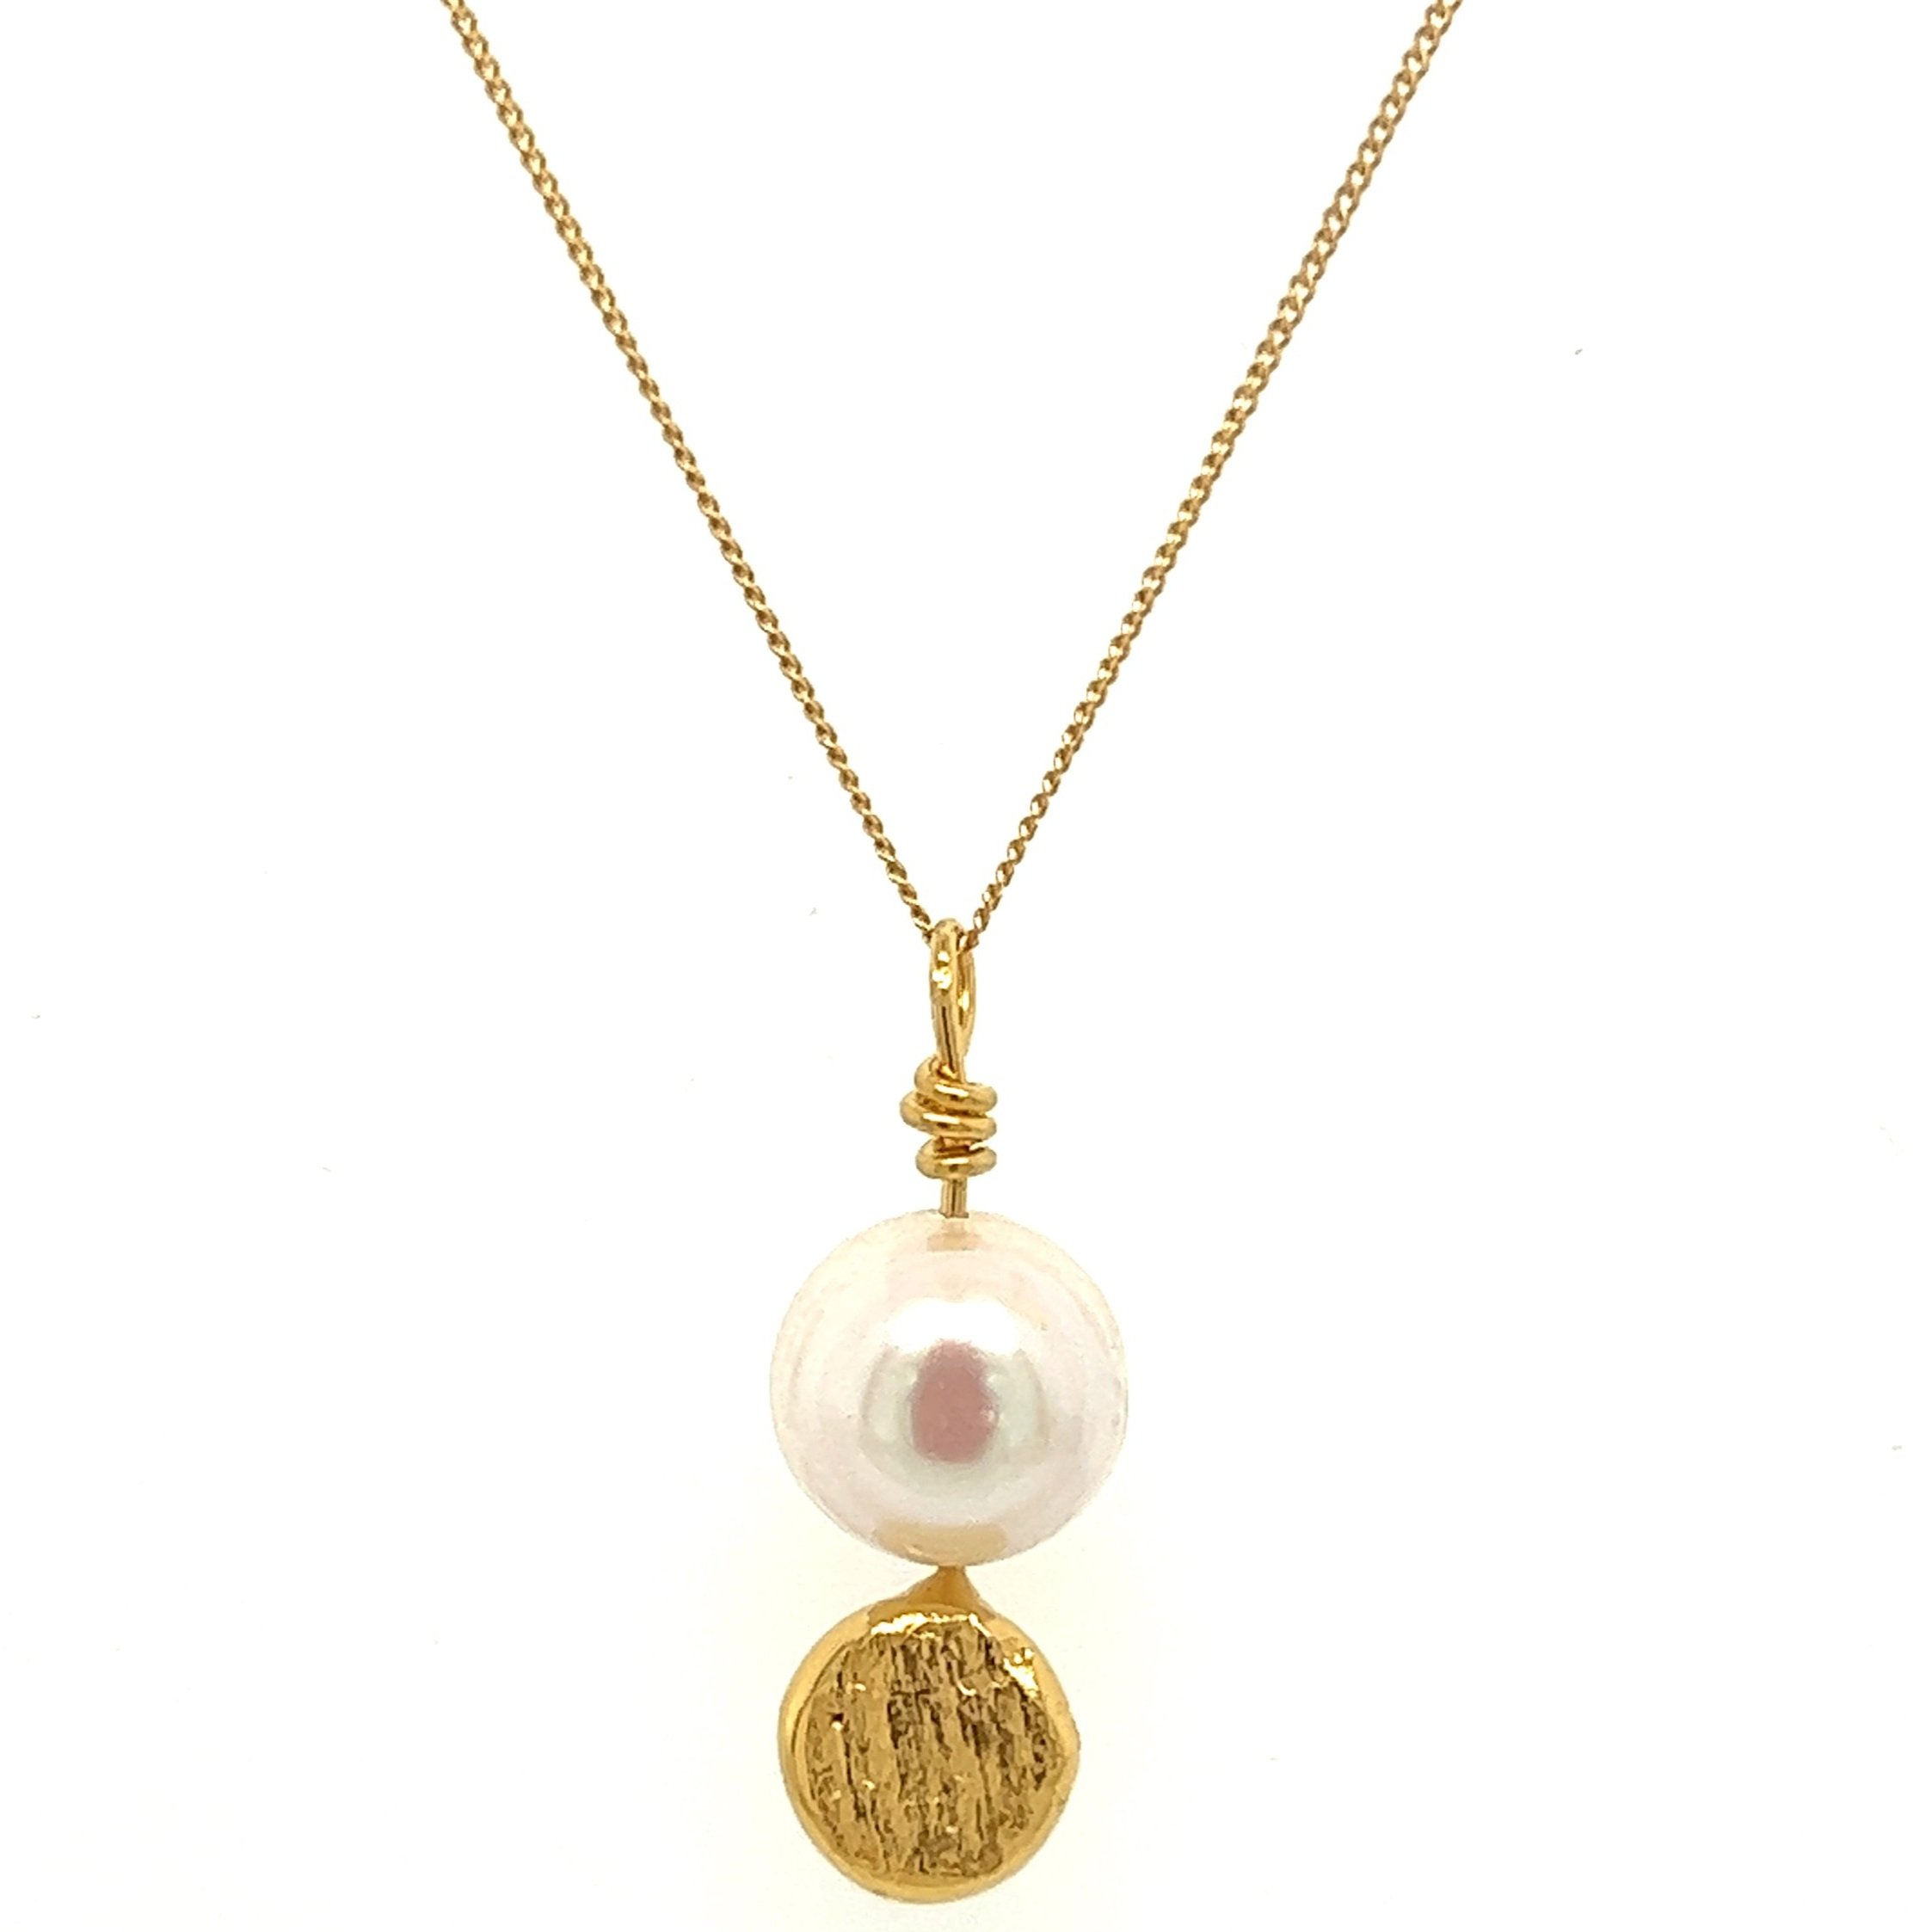 Anne-morgan-gold-pearl-pendant